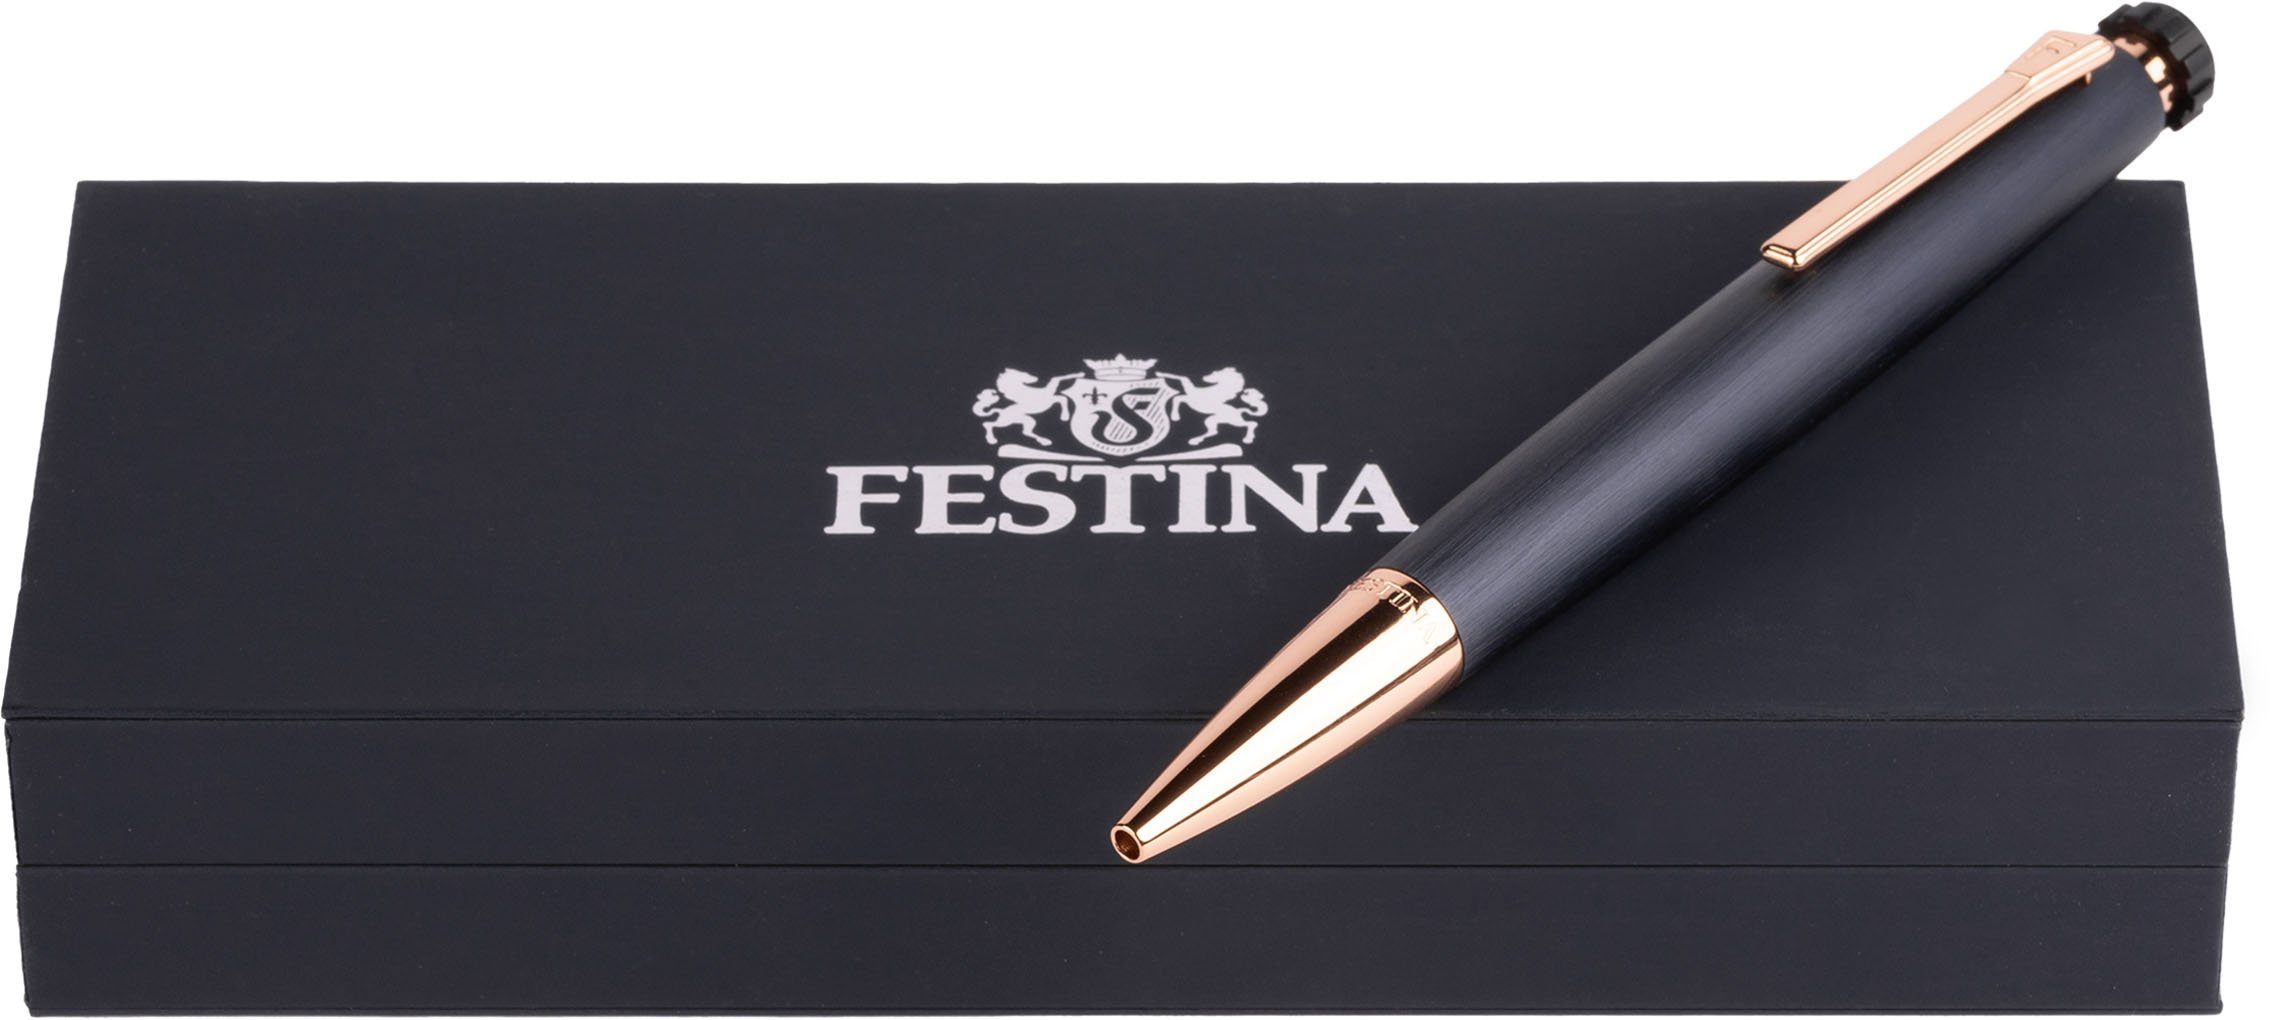 Festina Kugelschreiber Chrono Geschenk inklusive FWS4103/N, Bike, Etui, auch als ideal